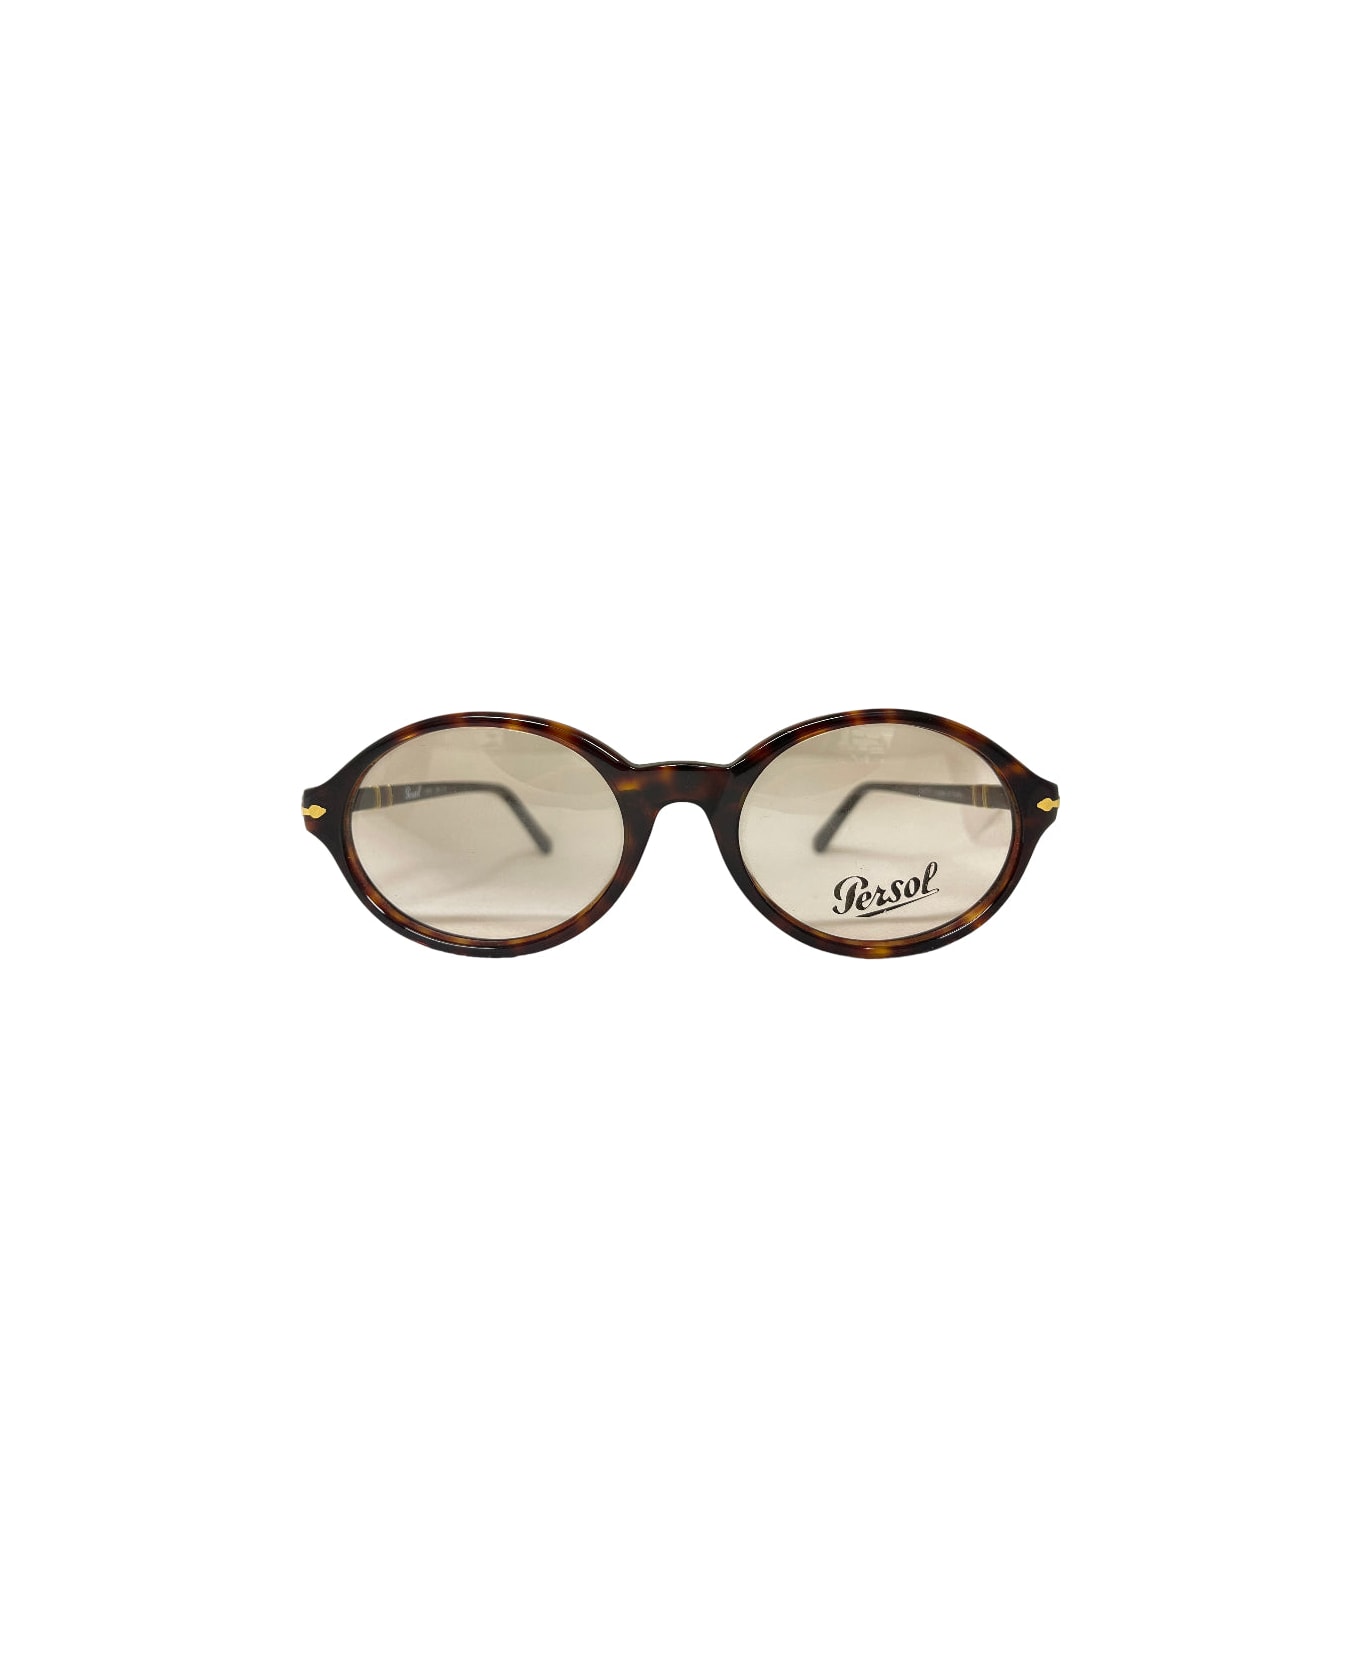 Persol 318 - Havana Sunglasses